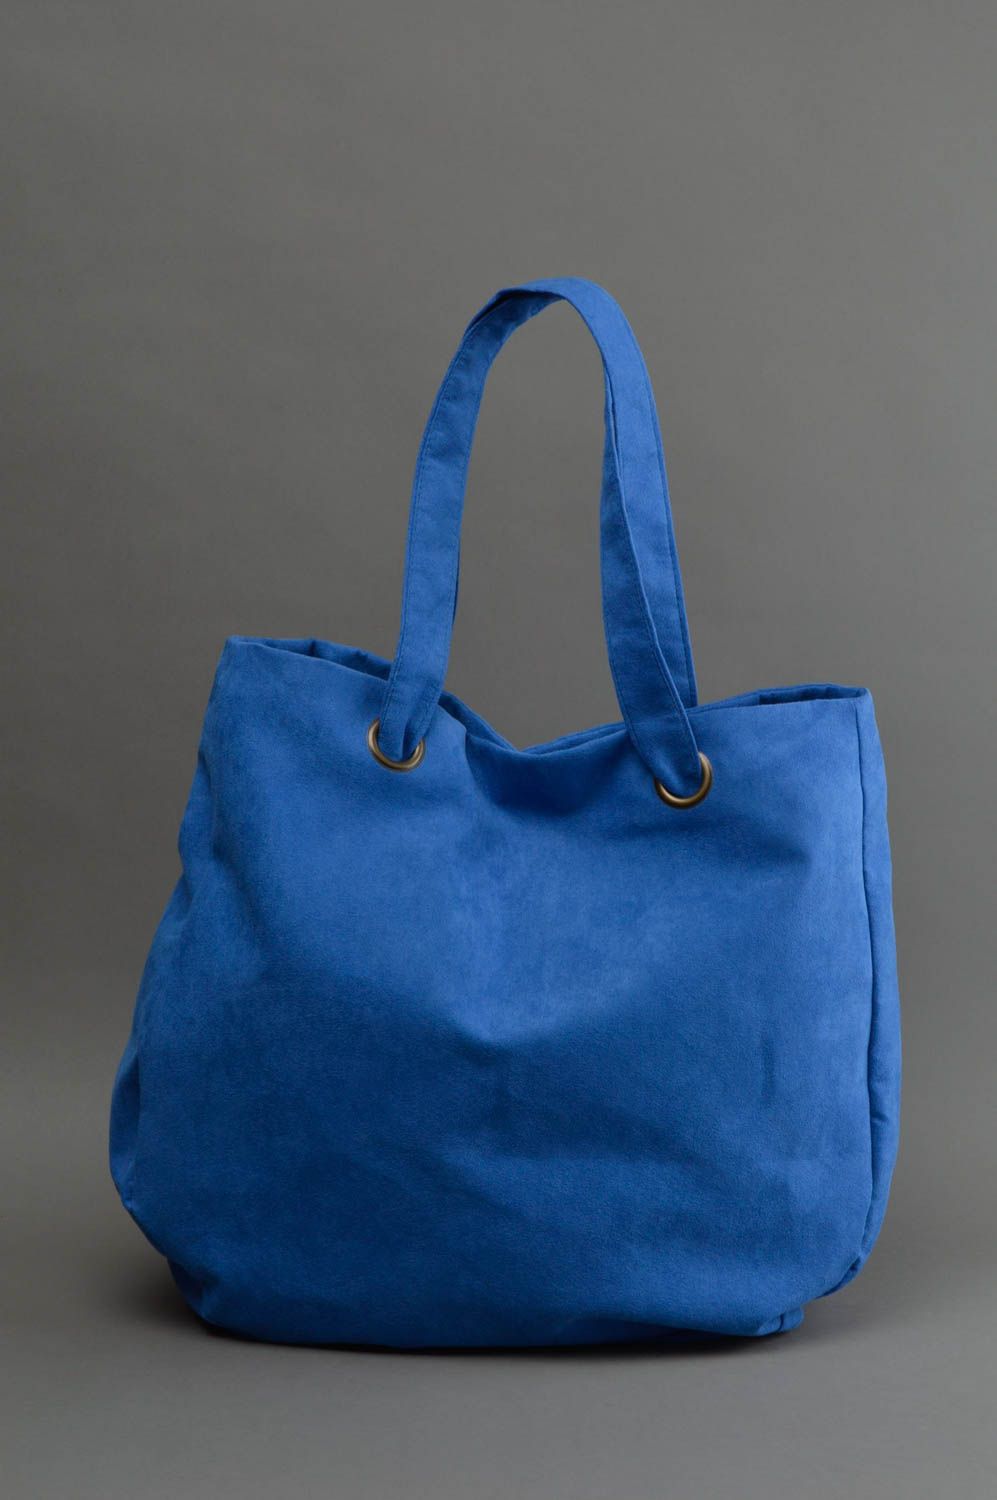 Handmade bag fabric purse ladies handbag women accessories gift for wife photo 1